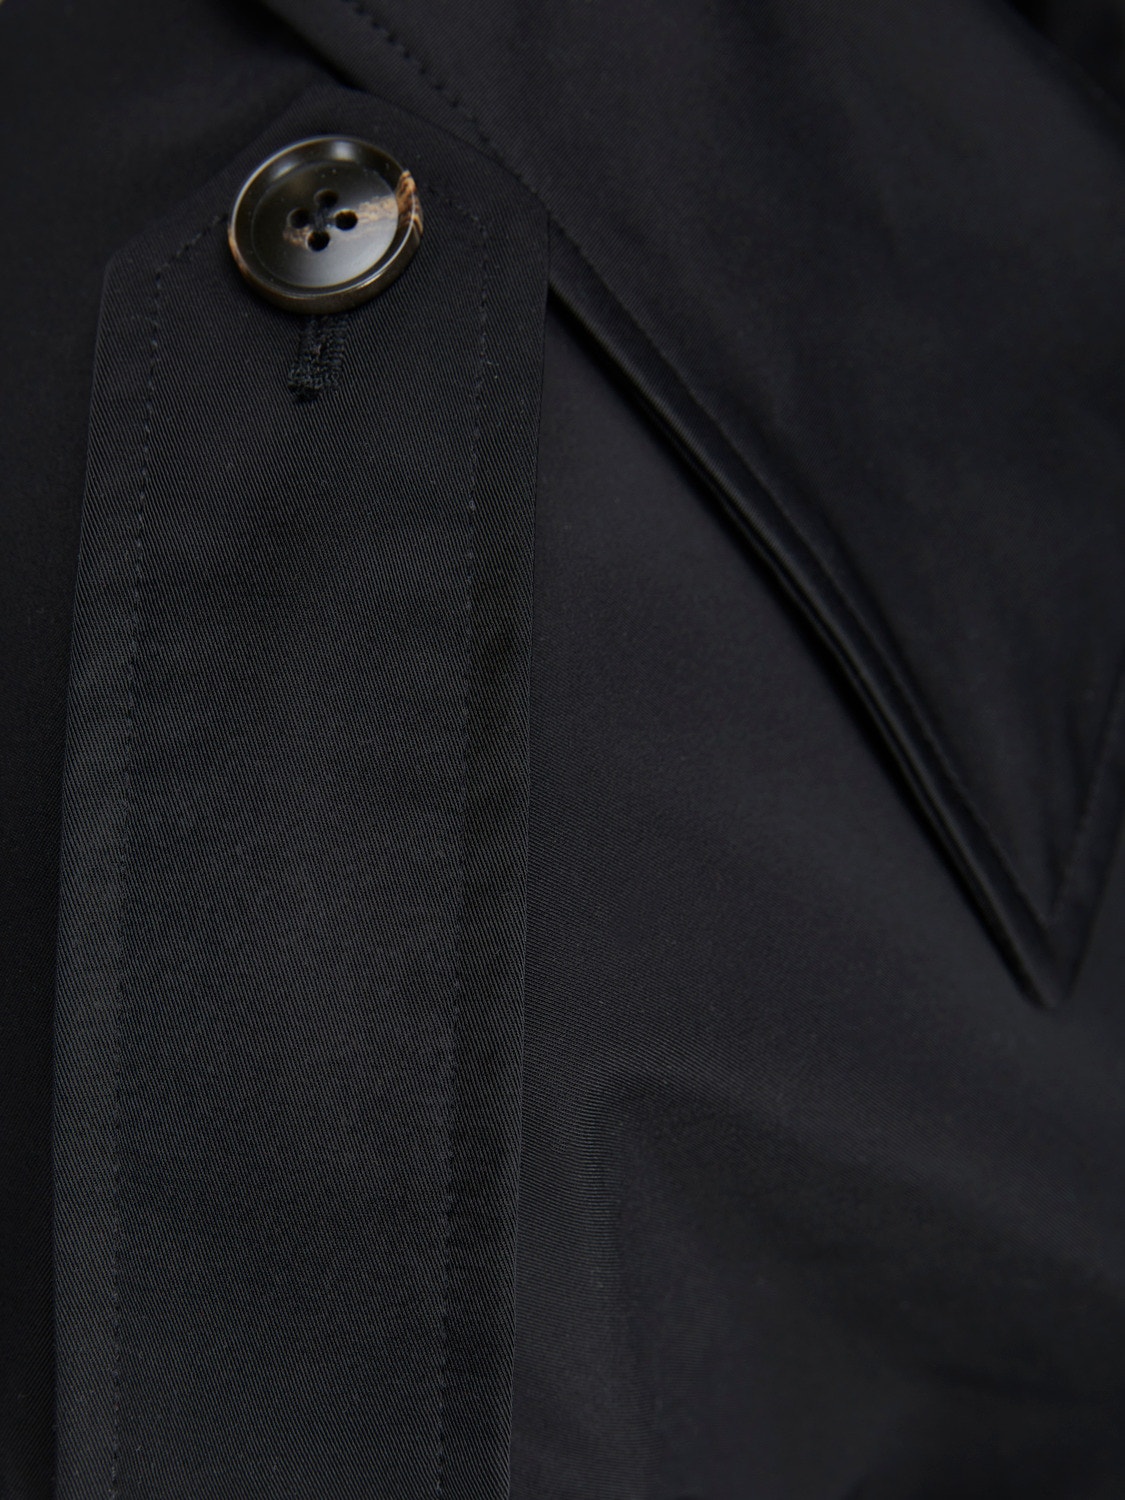 JJXX JXVERONA Trench coat -Black - 12247518